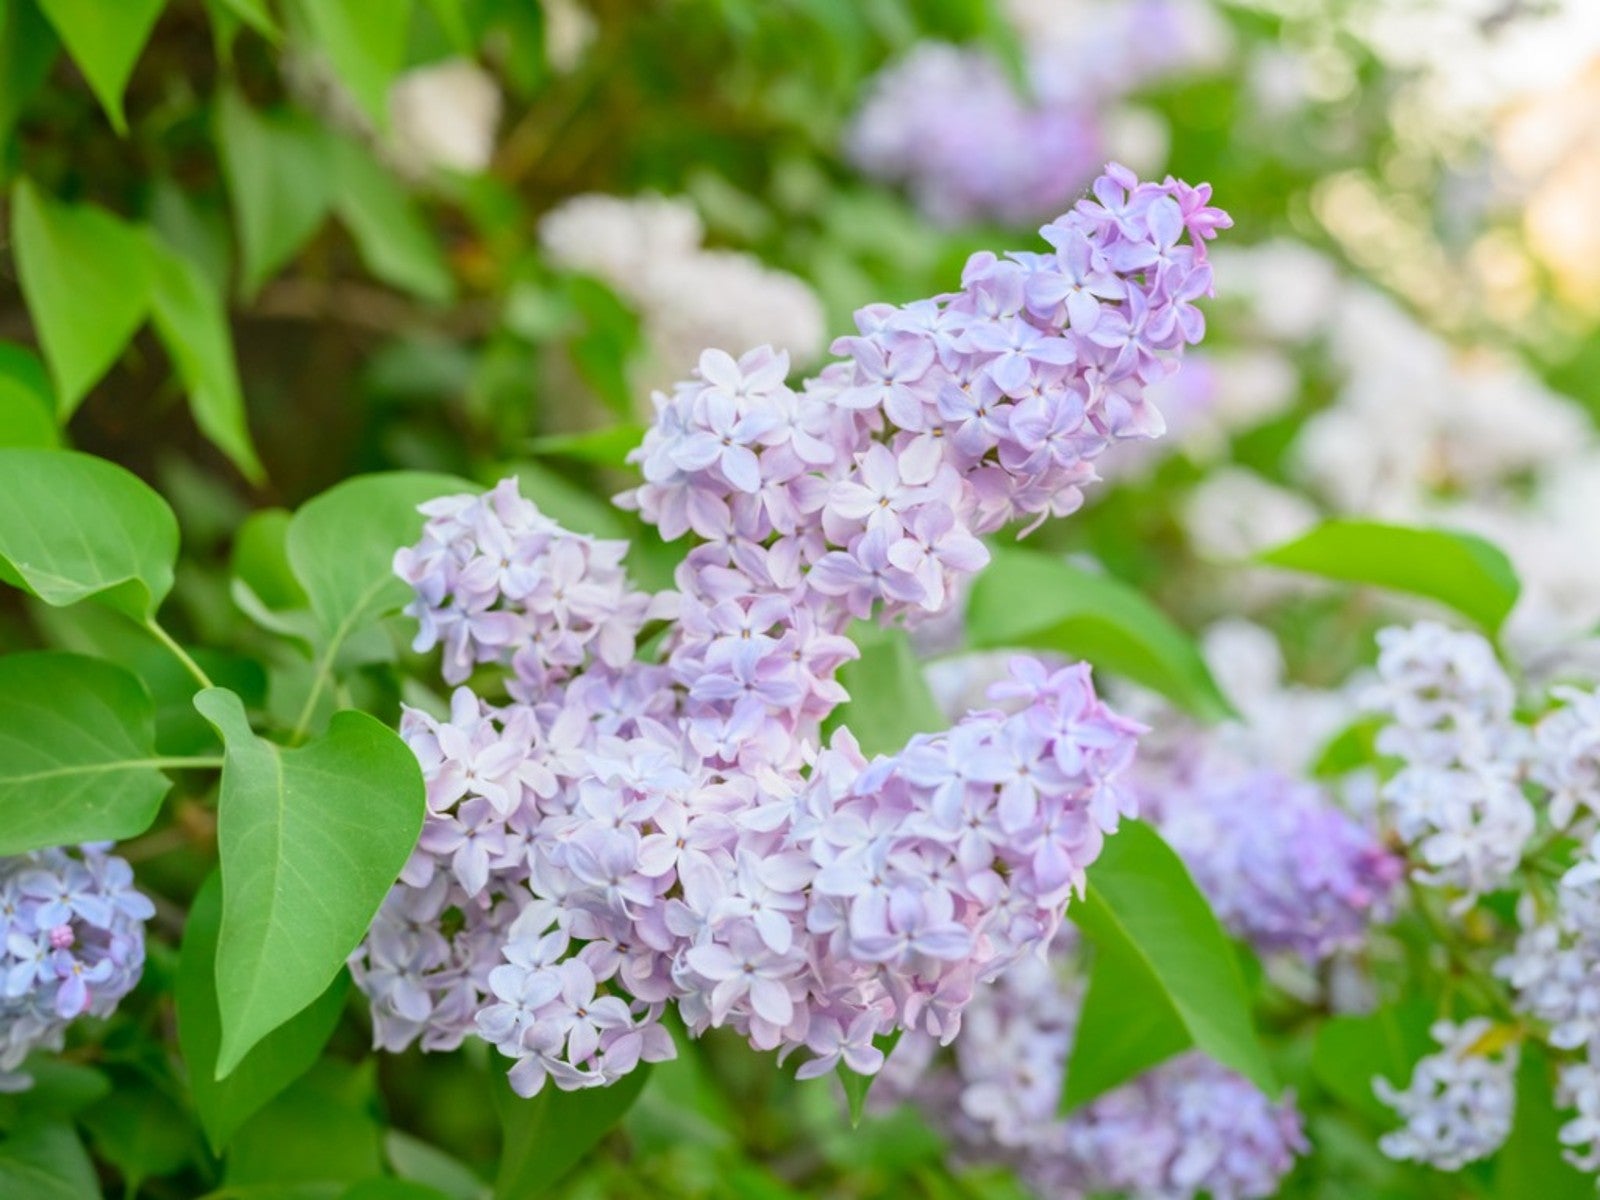 Light Purple Flower Images